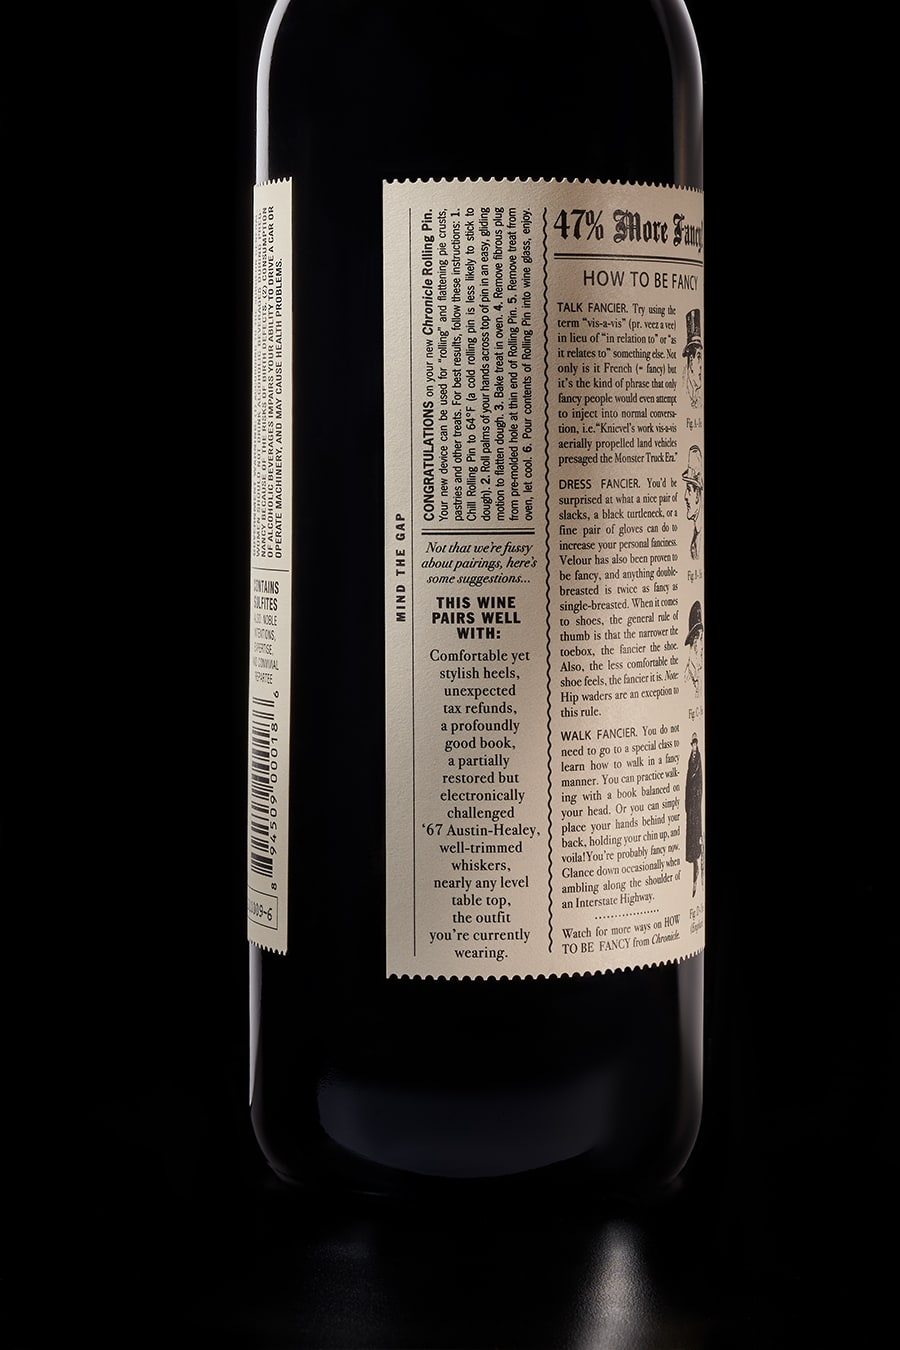 Chronicle Wine bottle label side panel detail